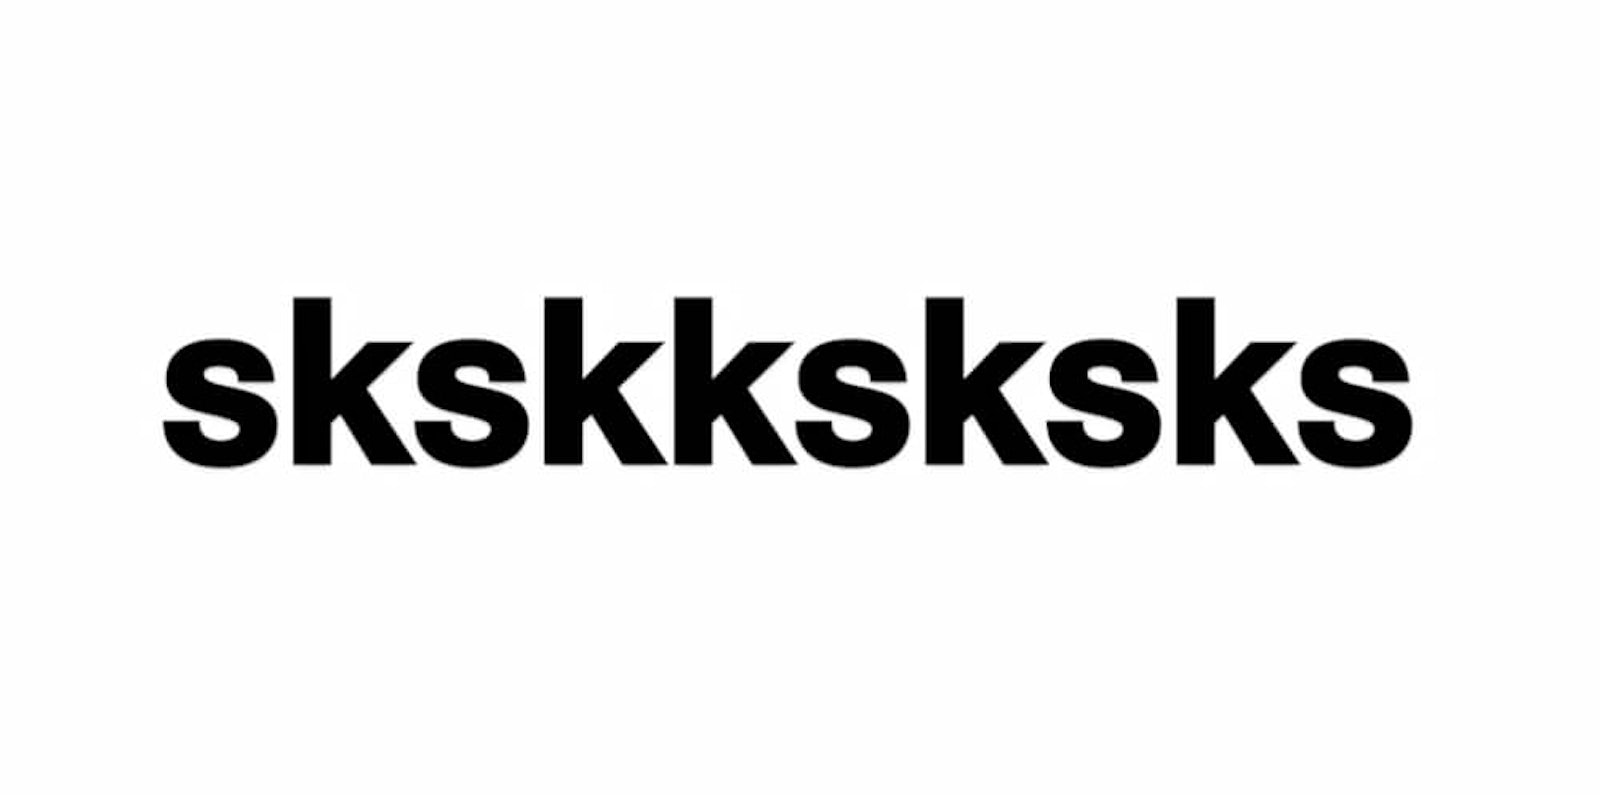 sksksksk_meaning